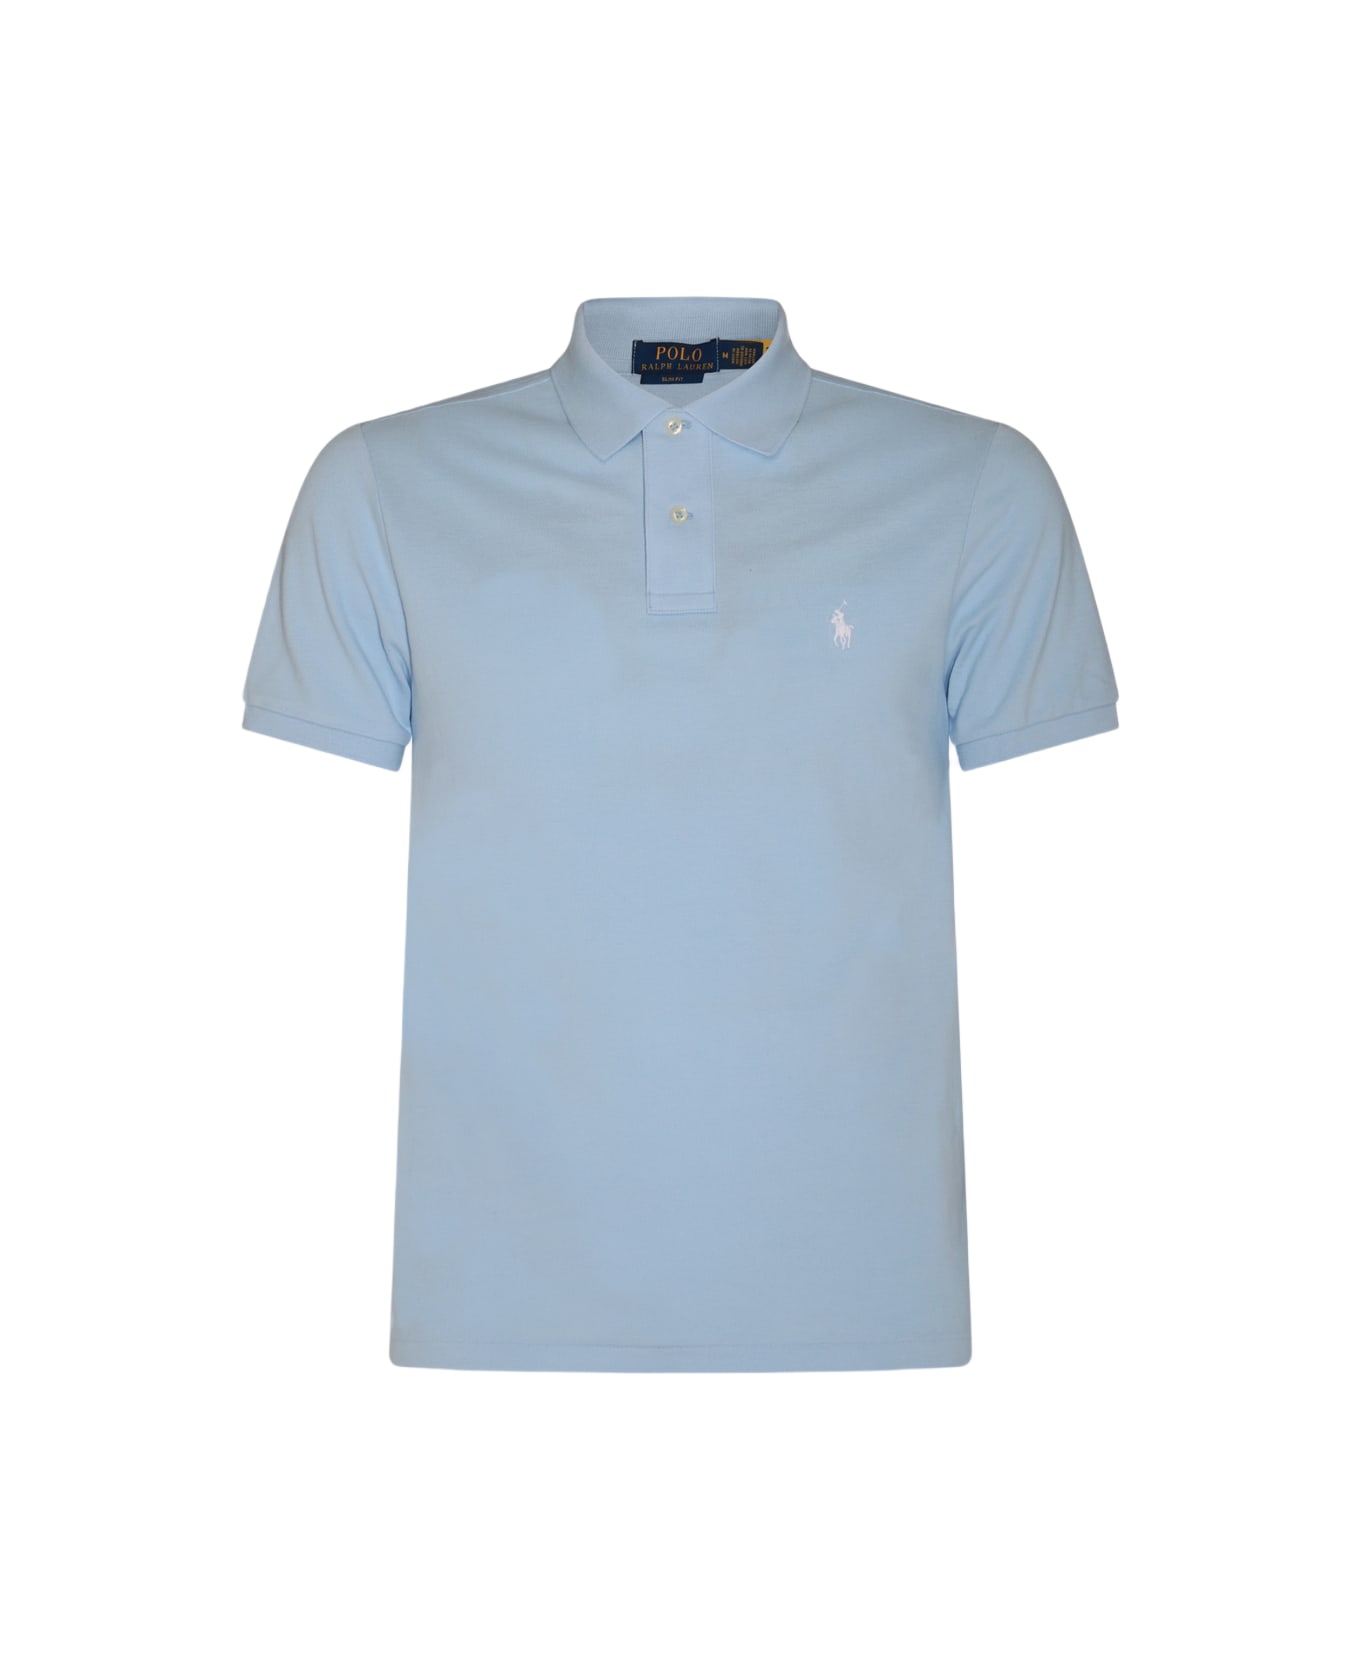 Polo Ralph Lauren Light Blue Cotton Polo Shirt - OFFICE BLUE ポロシャツ